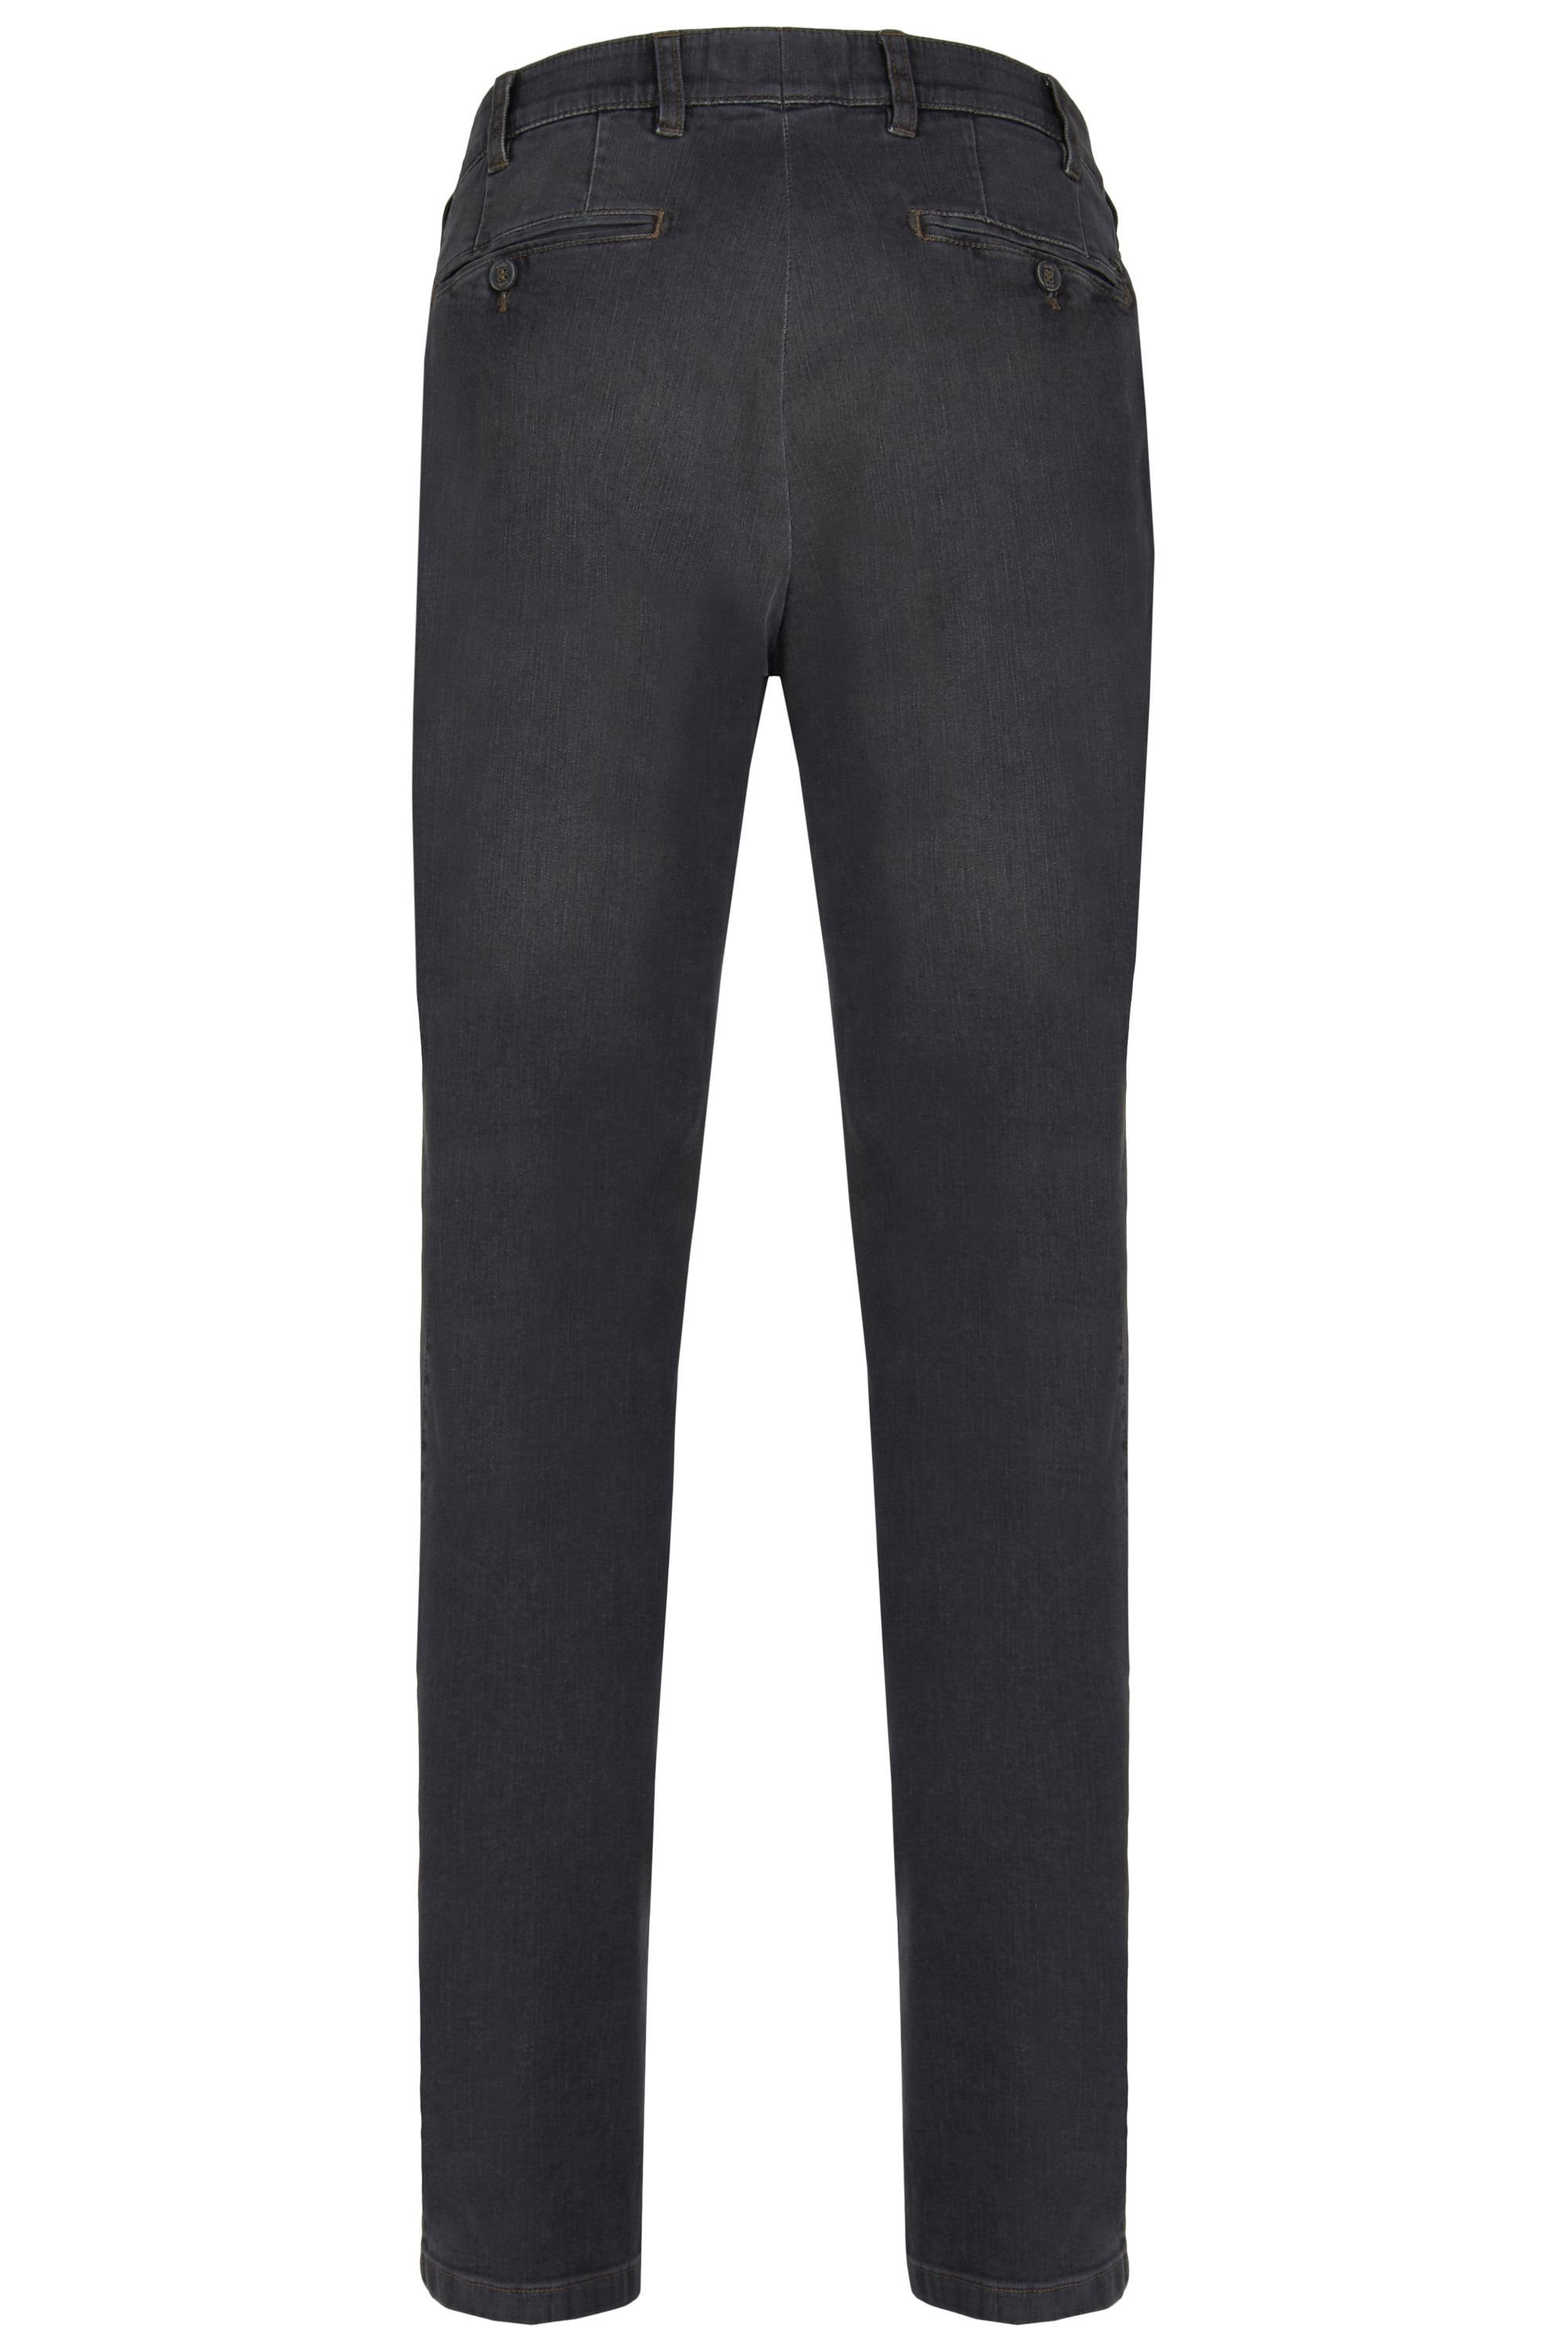 Herren 526 Jeans aus Fit Perfect Baumwolle grey Hose aubi (53) used High Bequeme Flex aubi: soft Stretch Modell Jeans